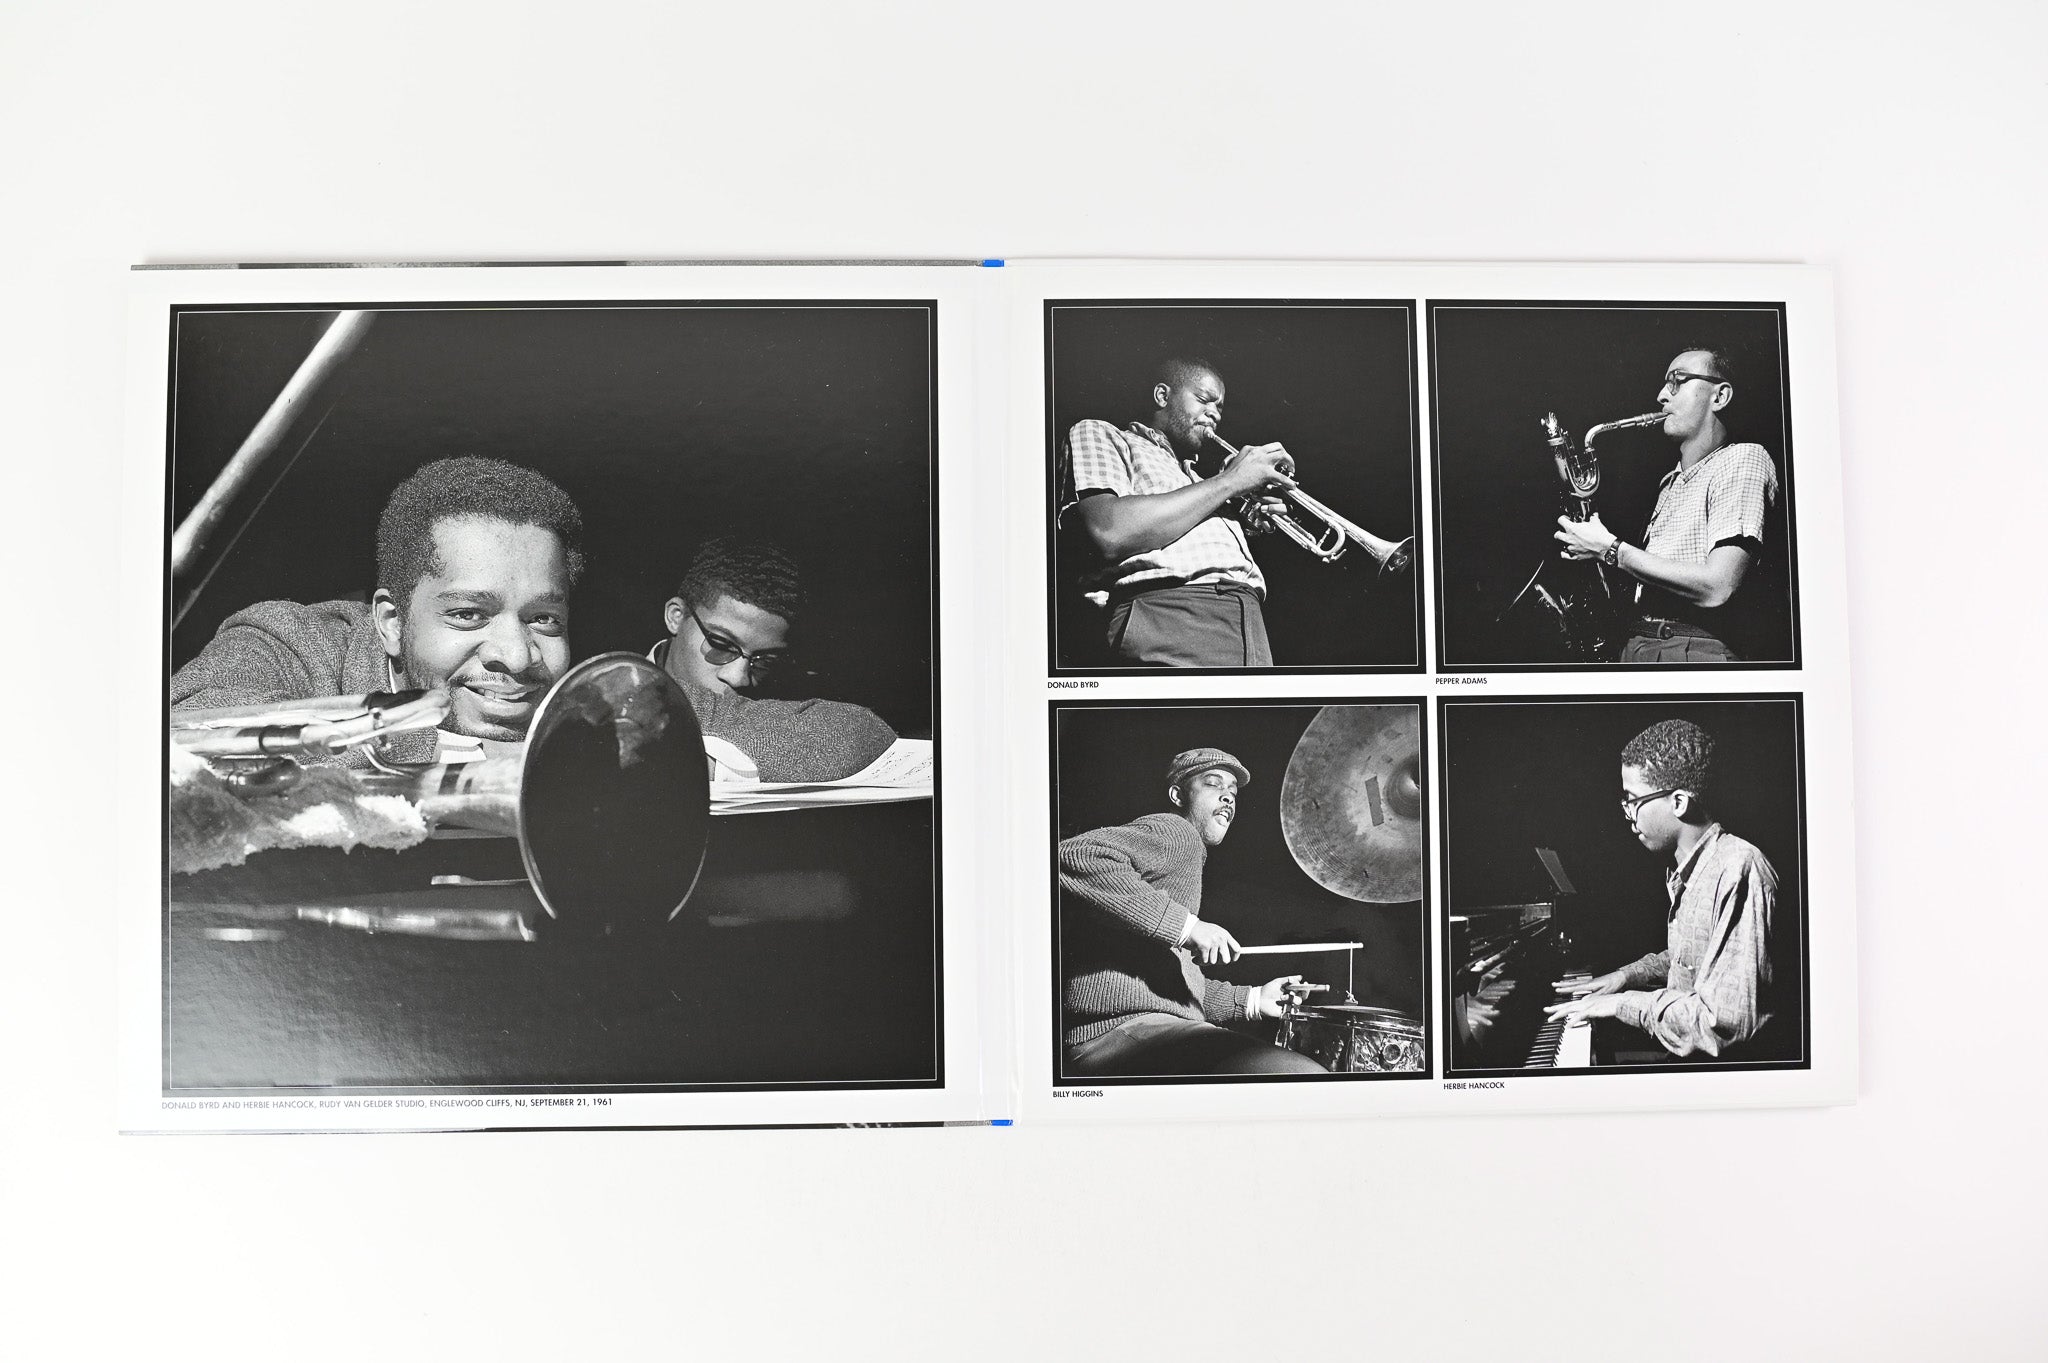 Donald Byrd - Royal Flush on Blue Note Ltd Music Matters 45 RPM Reissue